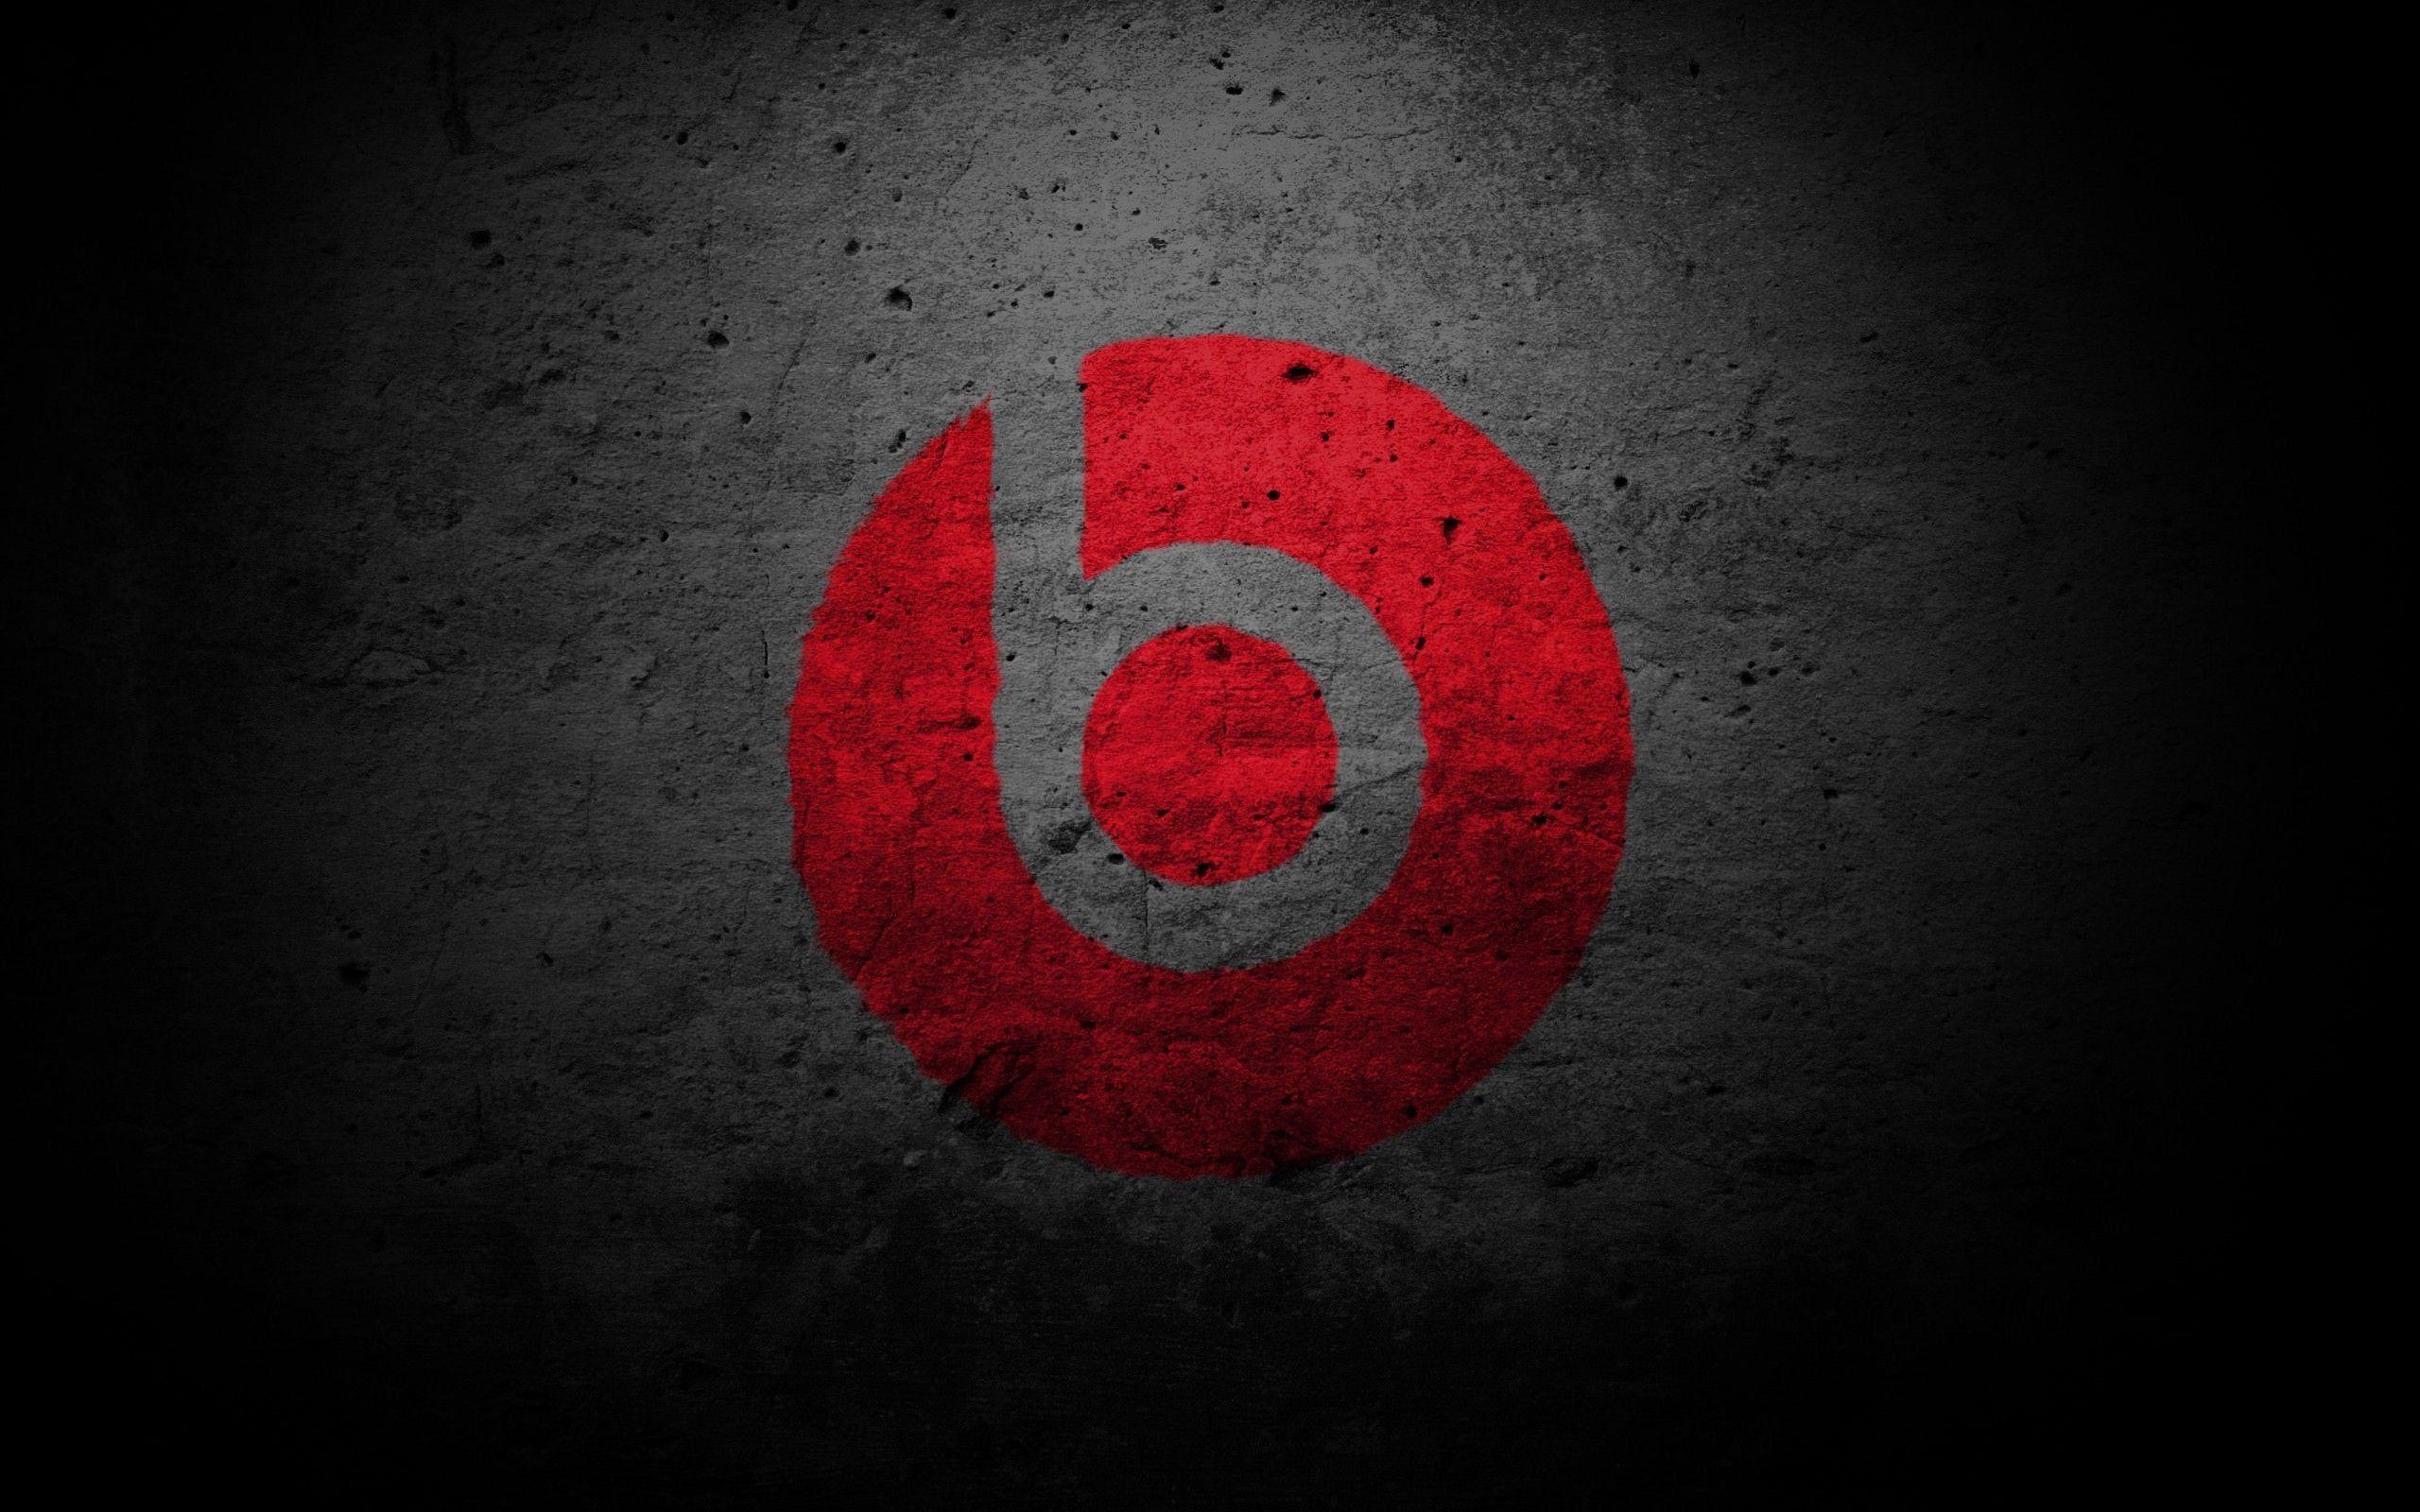 beats logo black